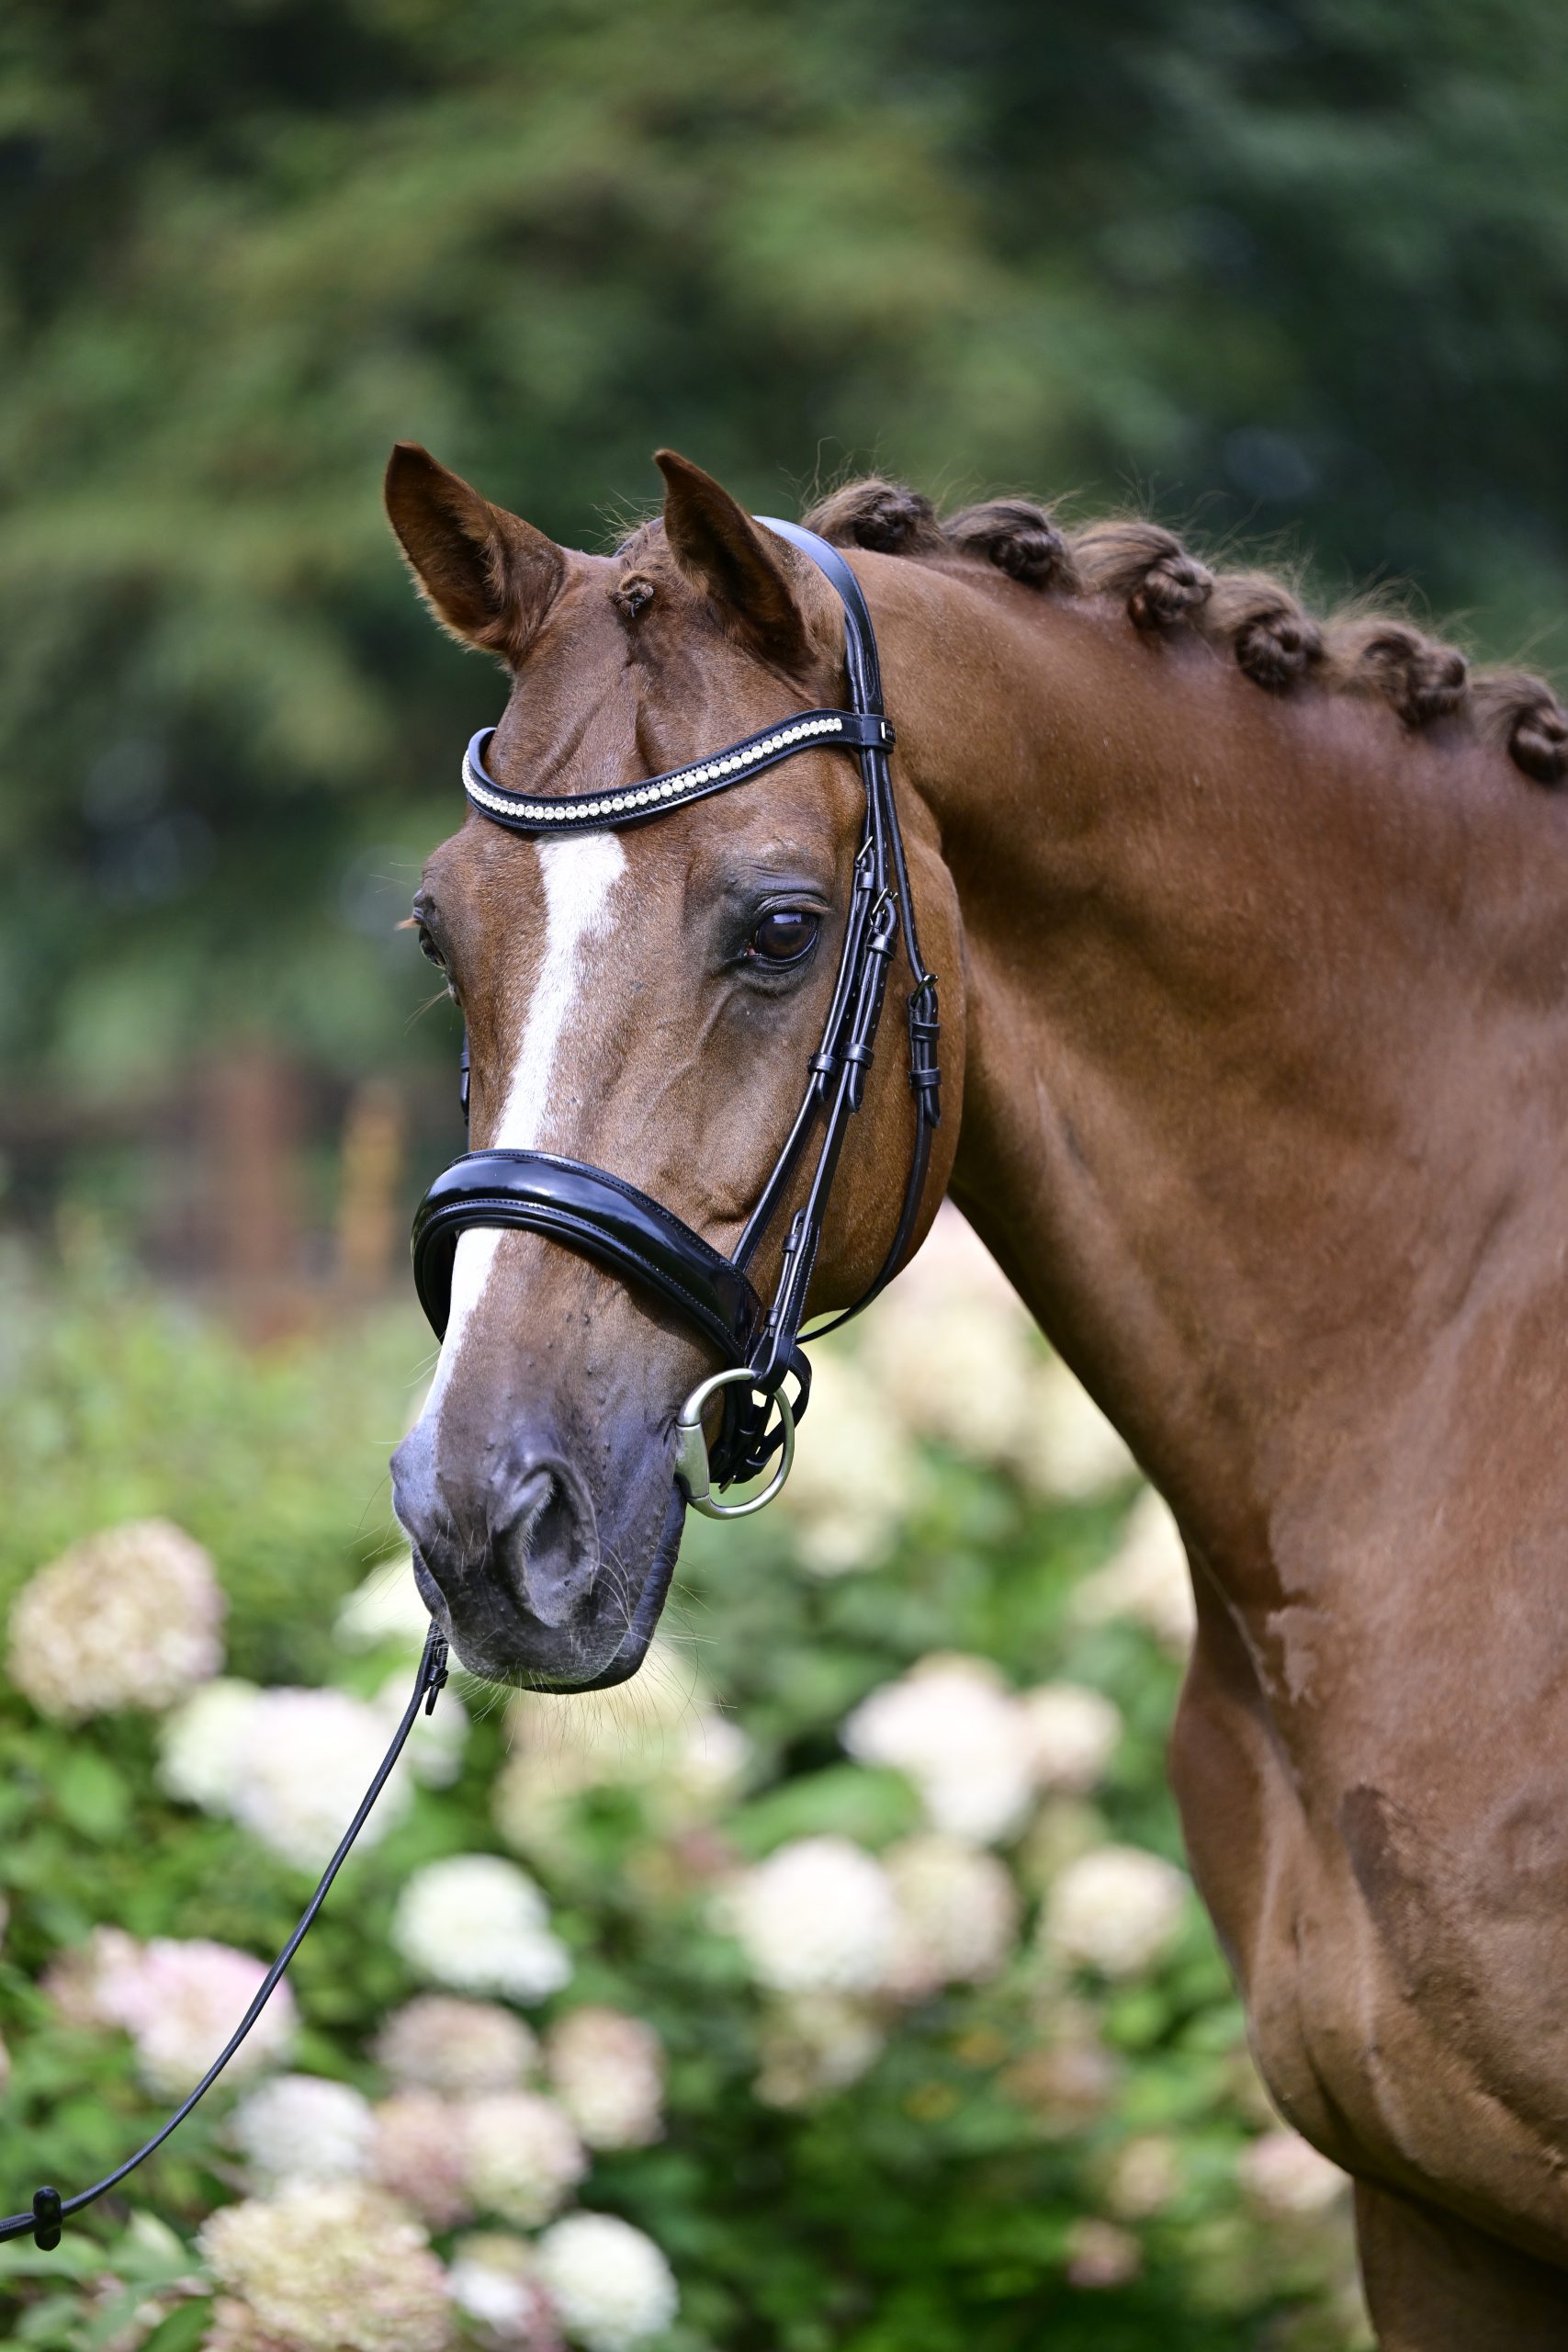 Main horse image